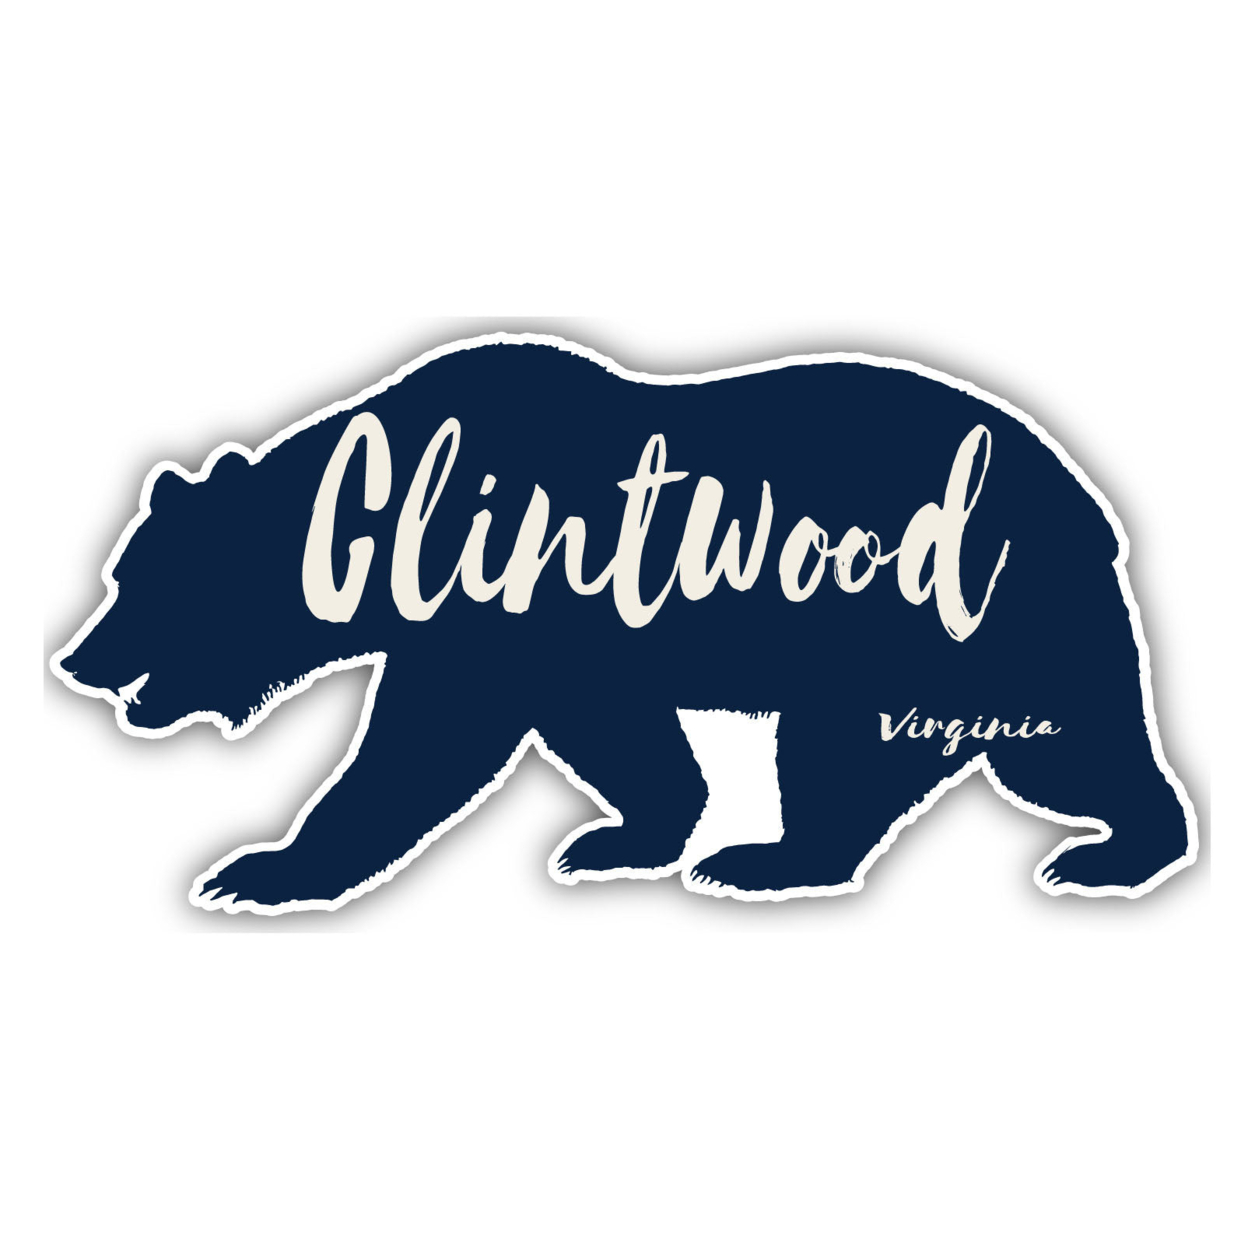 Clintwood Virginia Souvenir Decorative Stickers (Choose Theme And Size) - Single Unit, 12-Inch, Bear